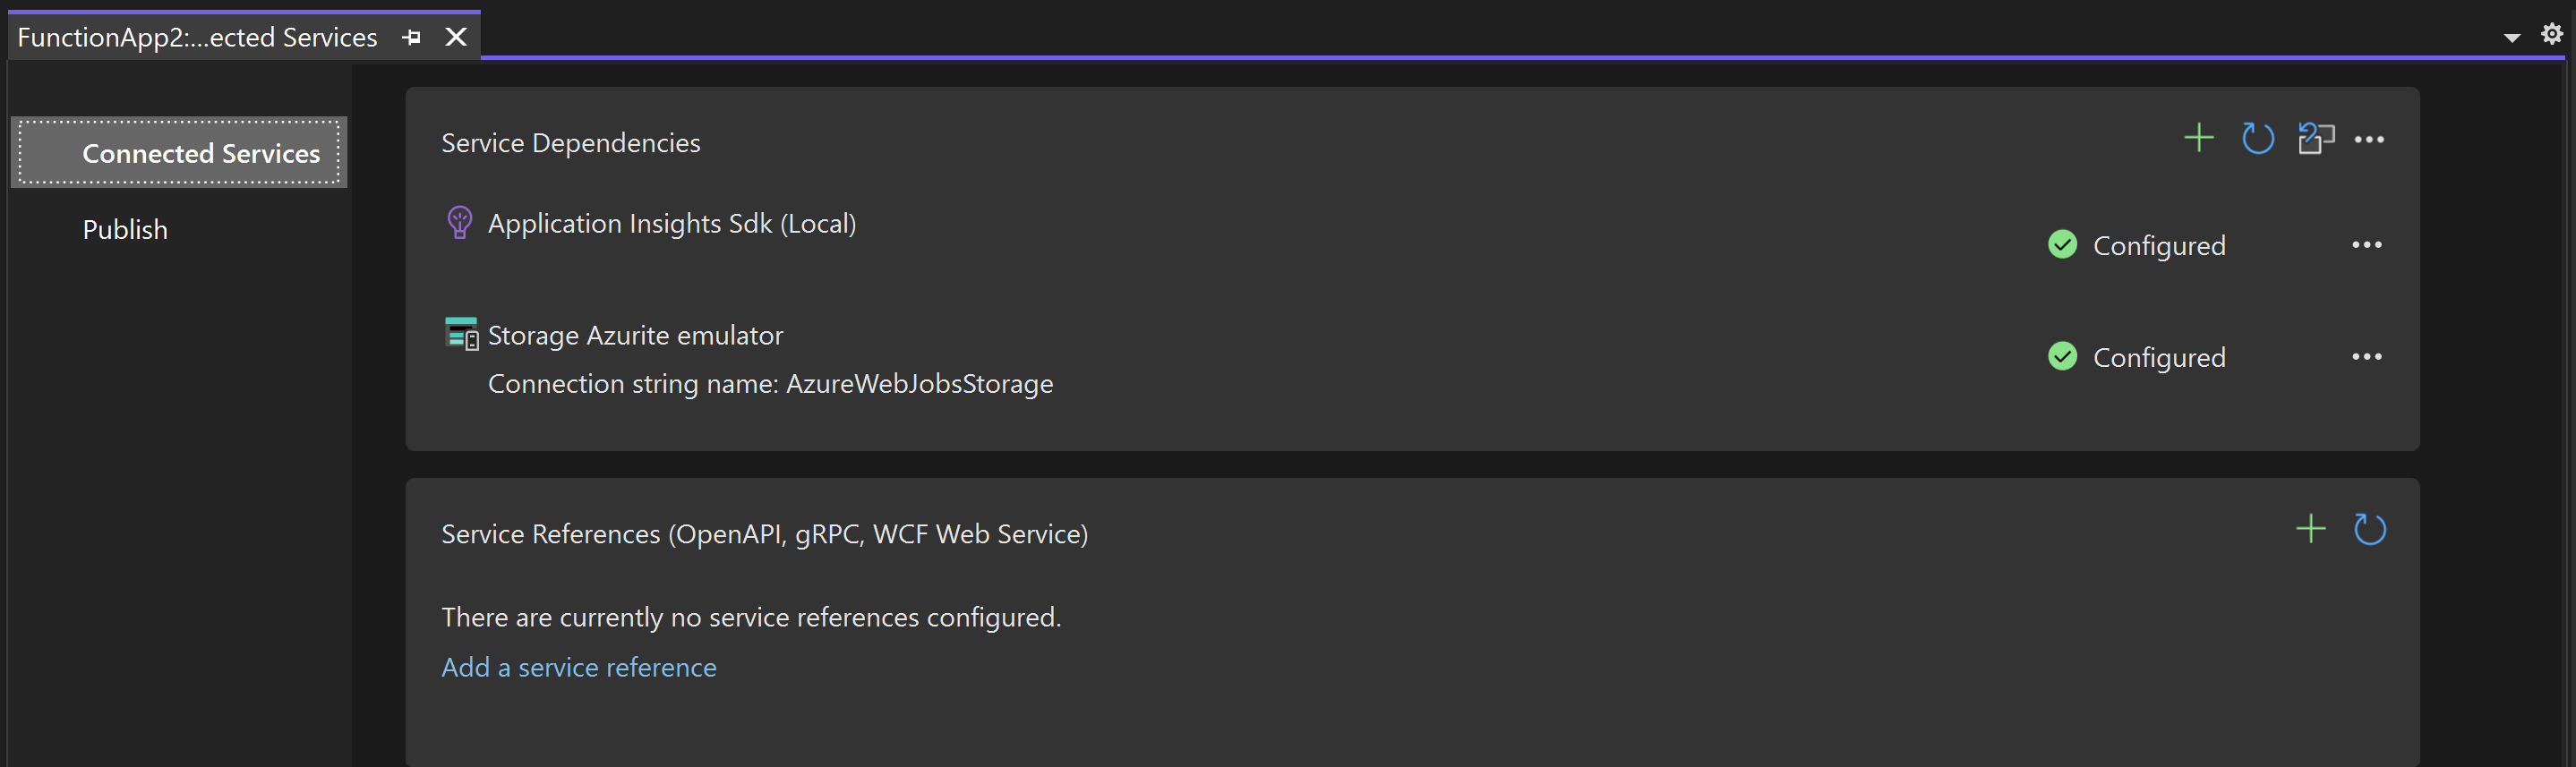 Service dependencies in Visual Studio.